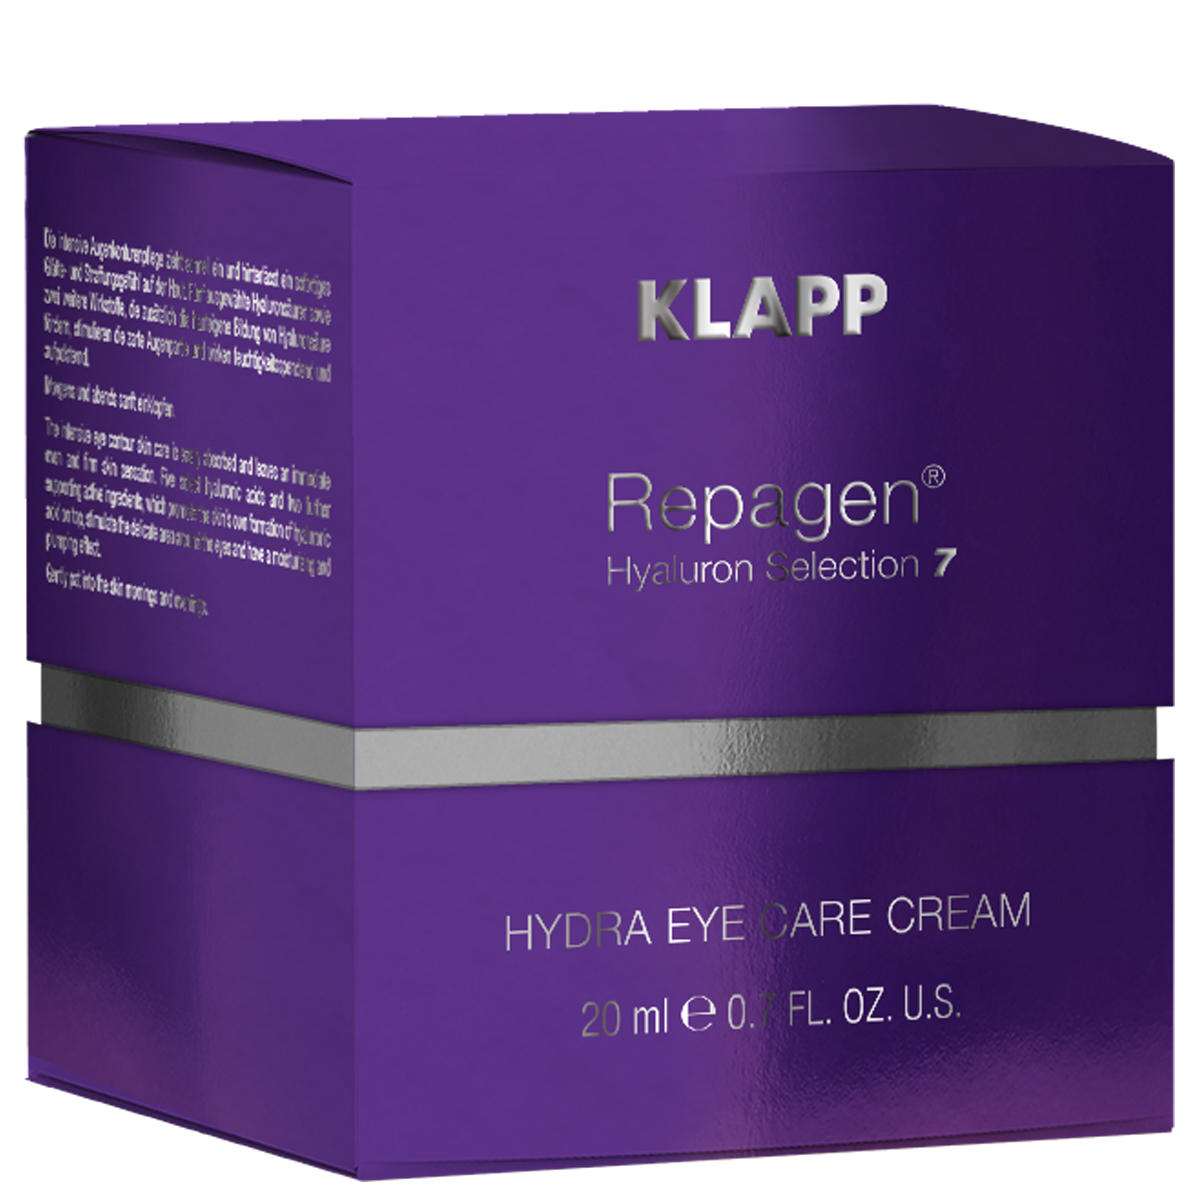 KLAPP REPAGEN HYALURON Hydra Eye Care Cream 20 ml - 2